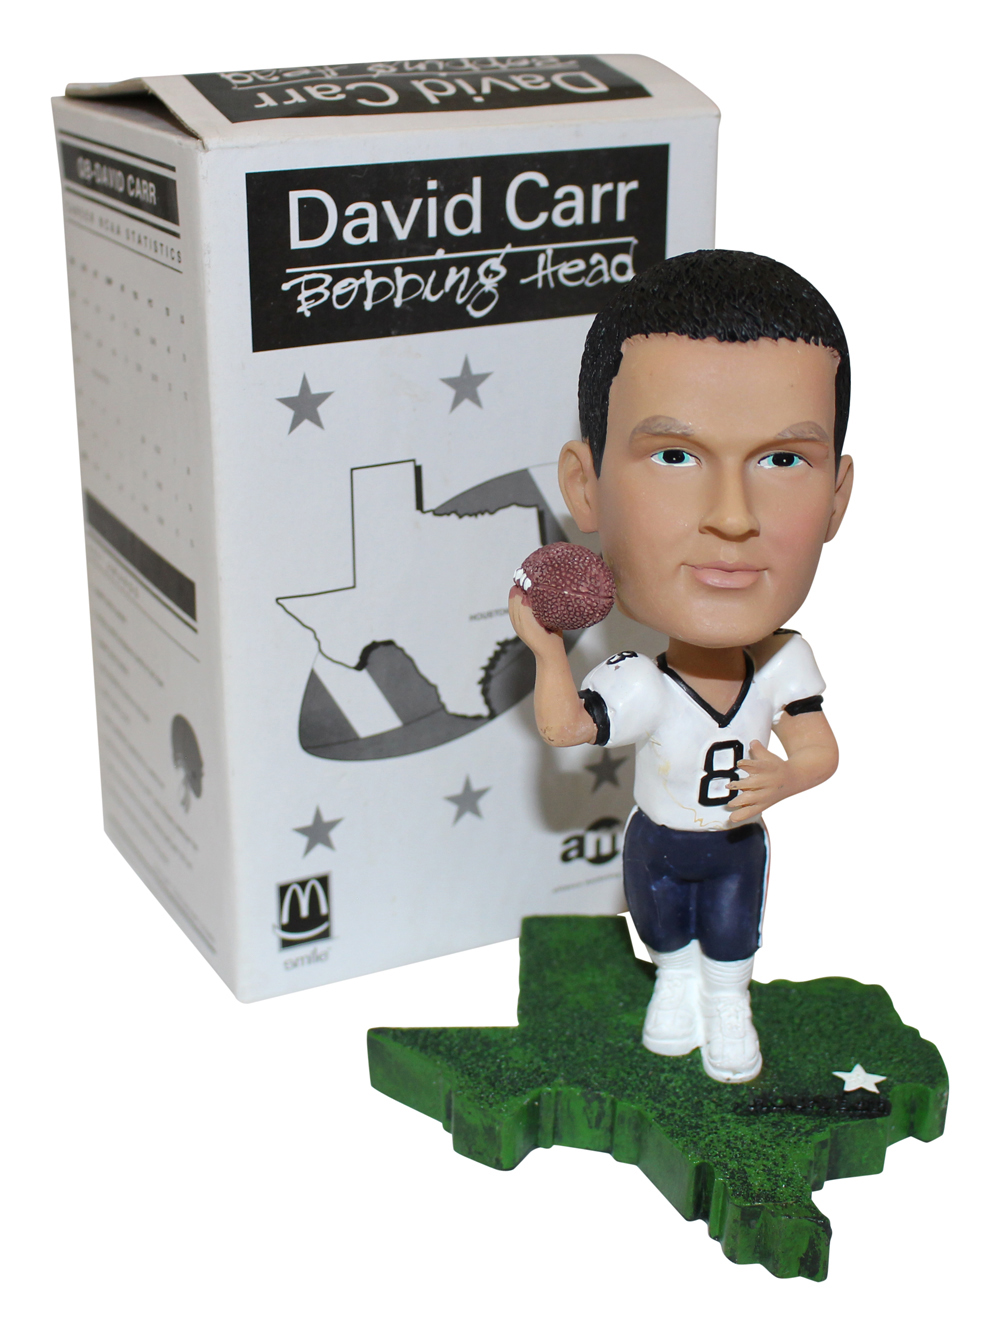 David Carr Houston Texans Bobblehead Figure